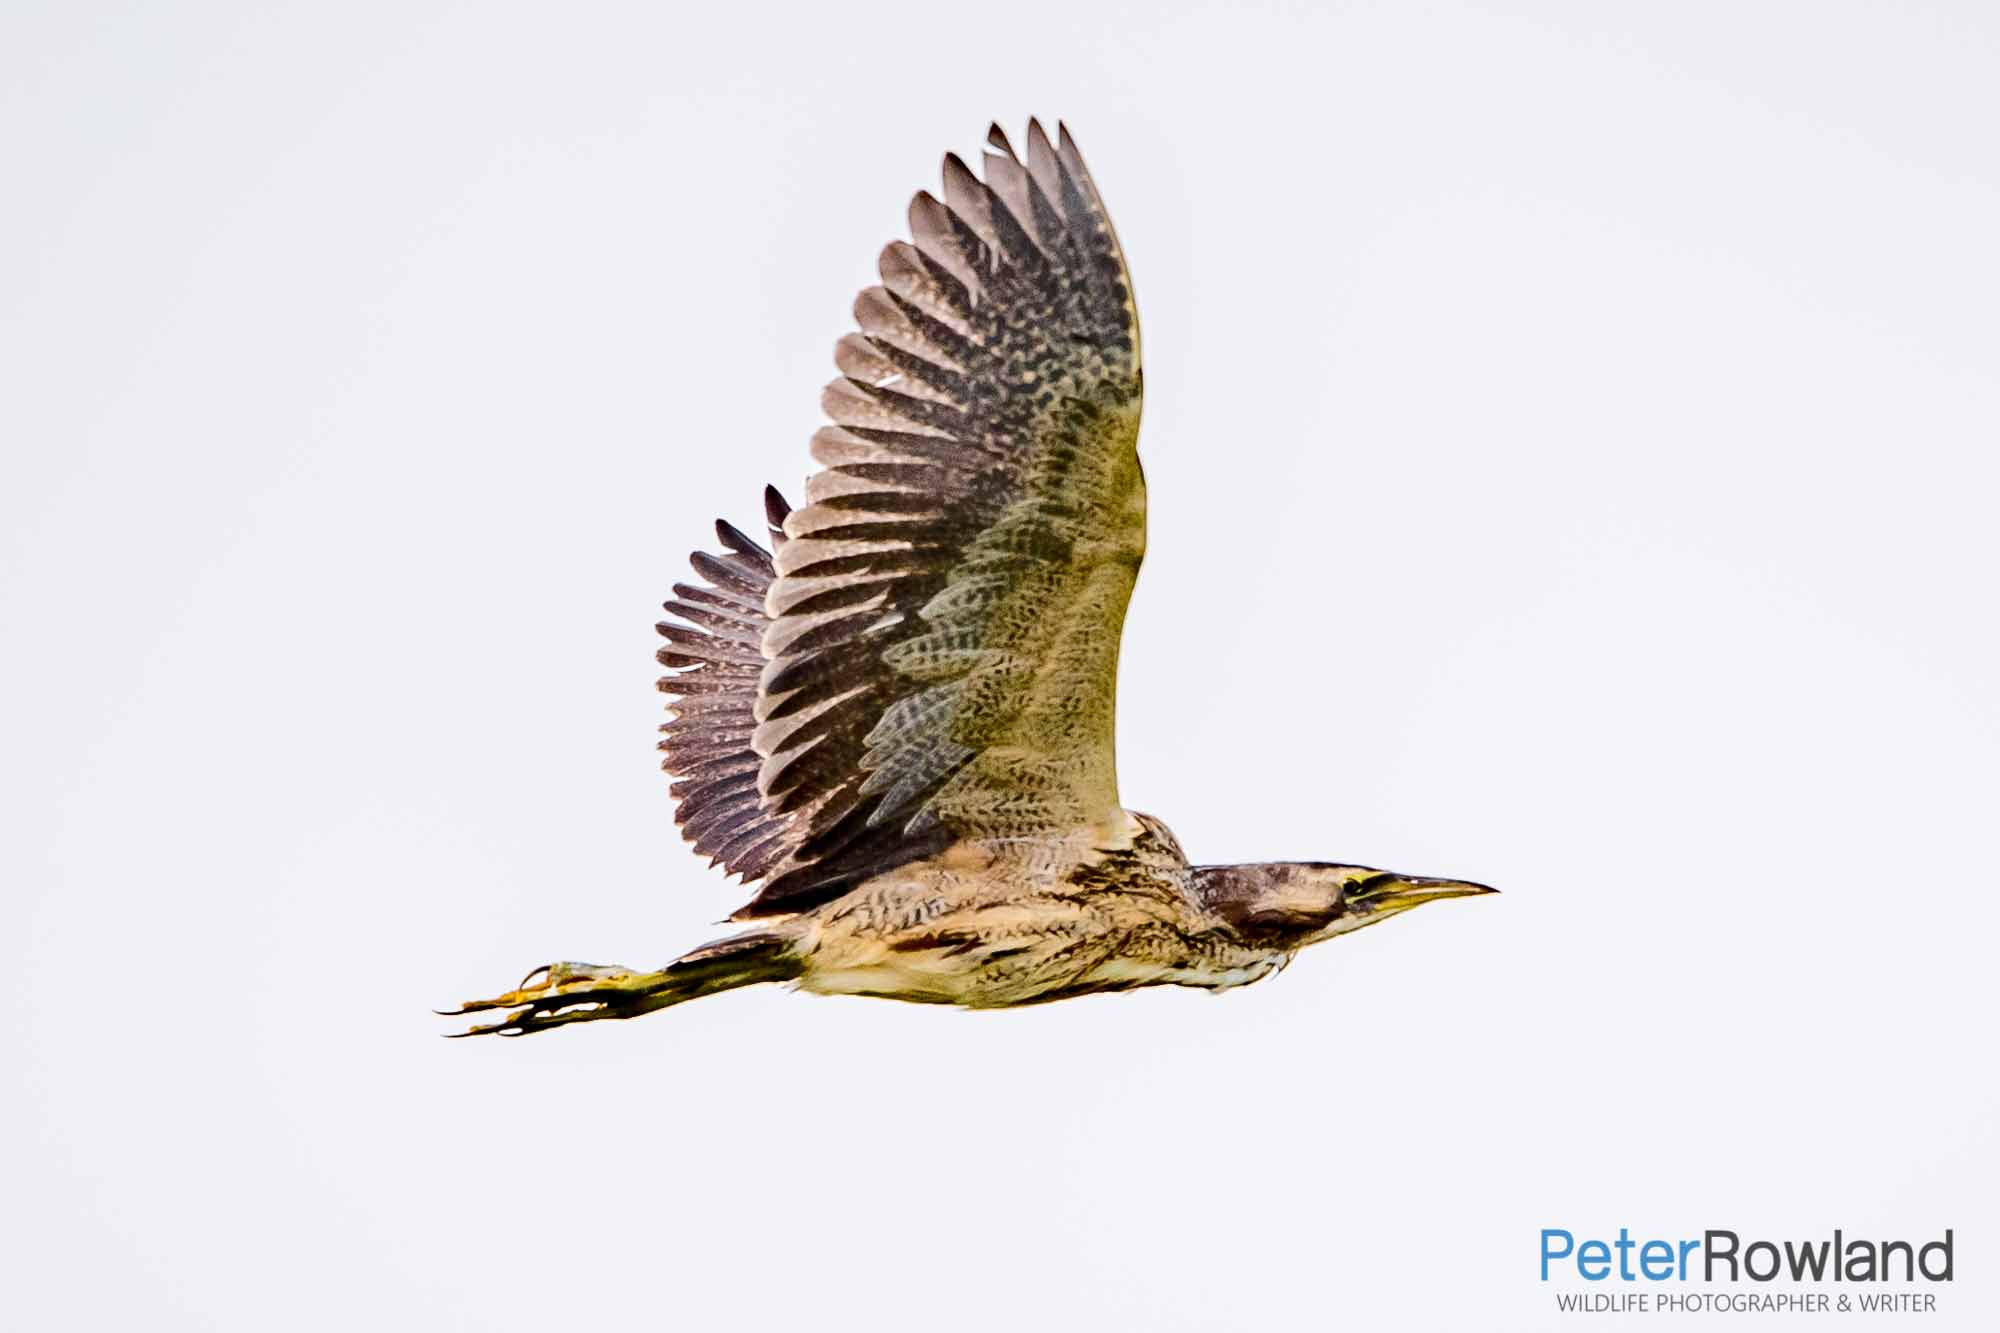 An Australasian Bittern in flight